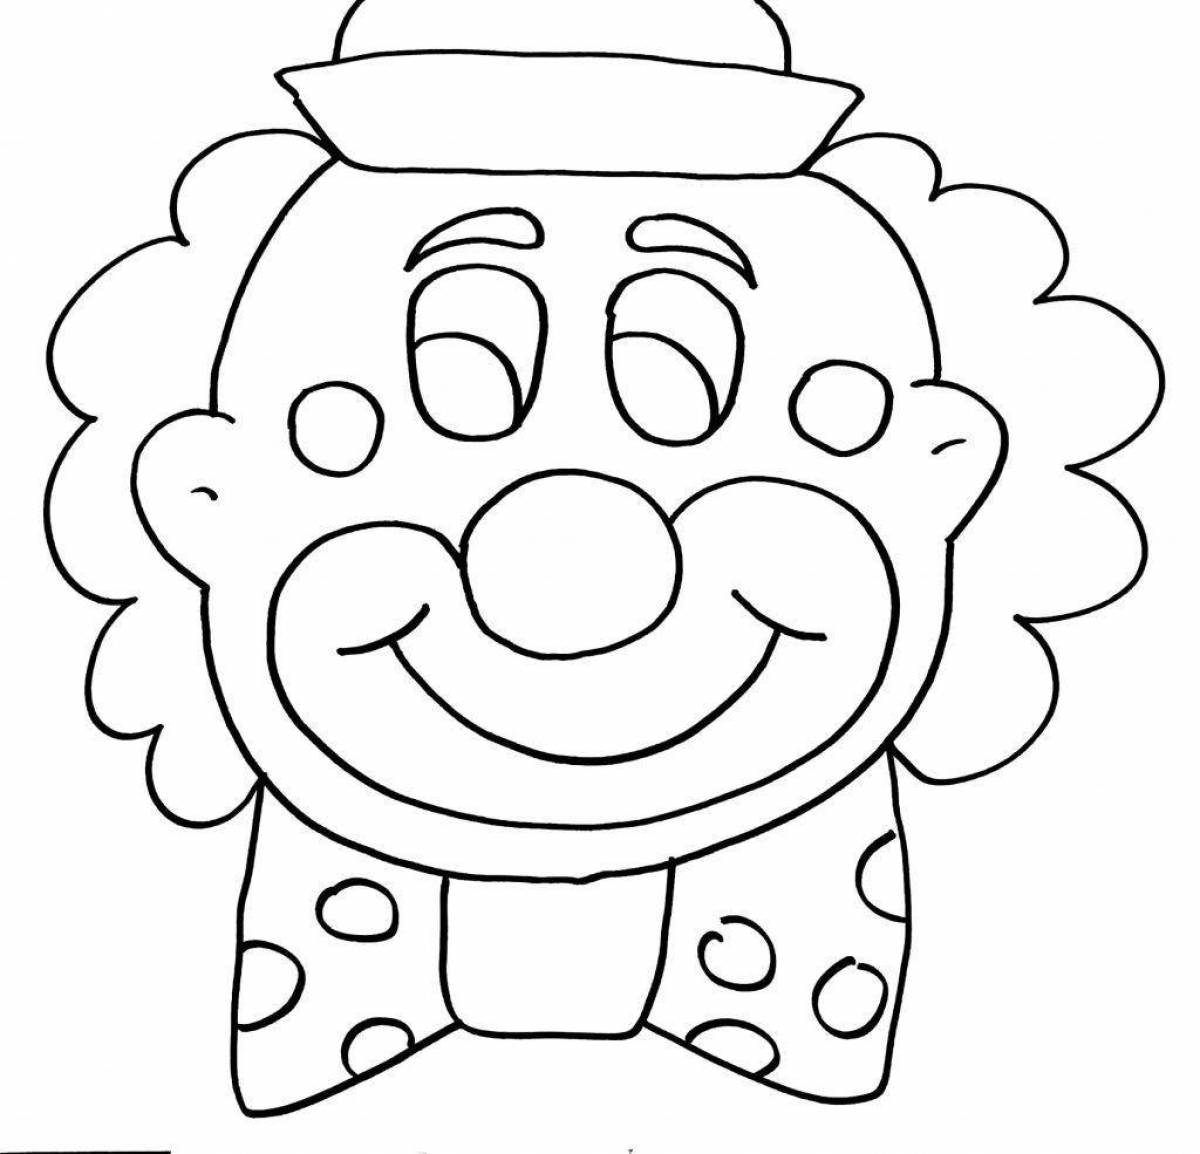 Coloring book shining clown for preschoolers